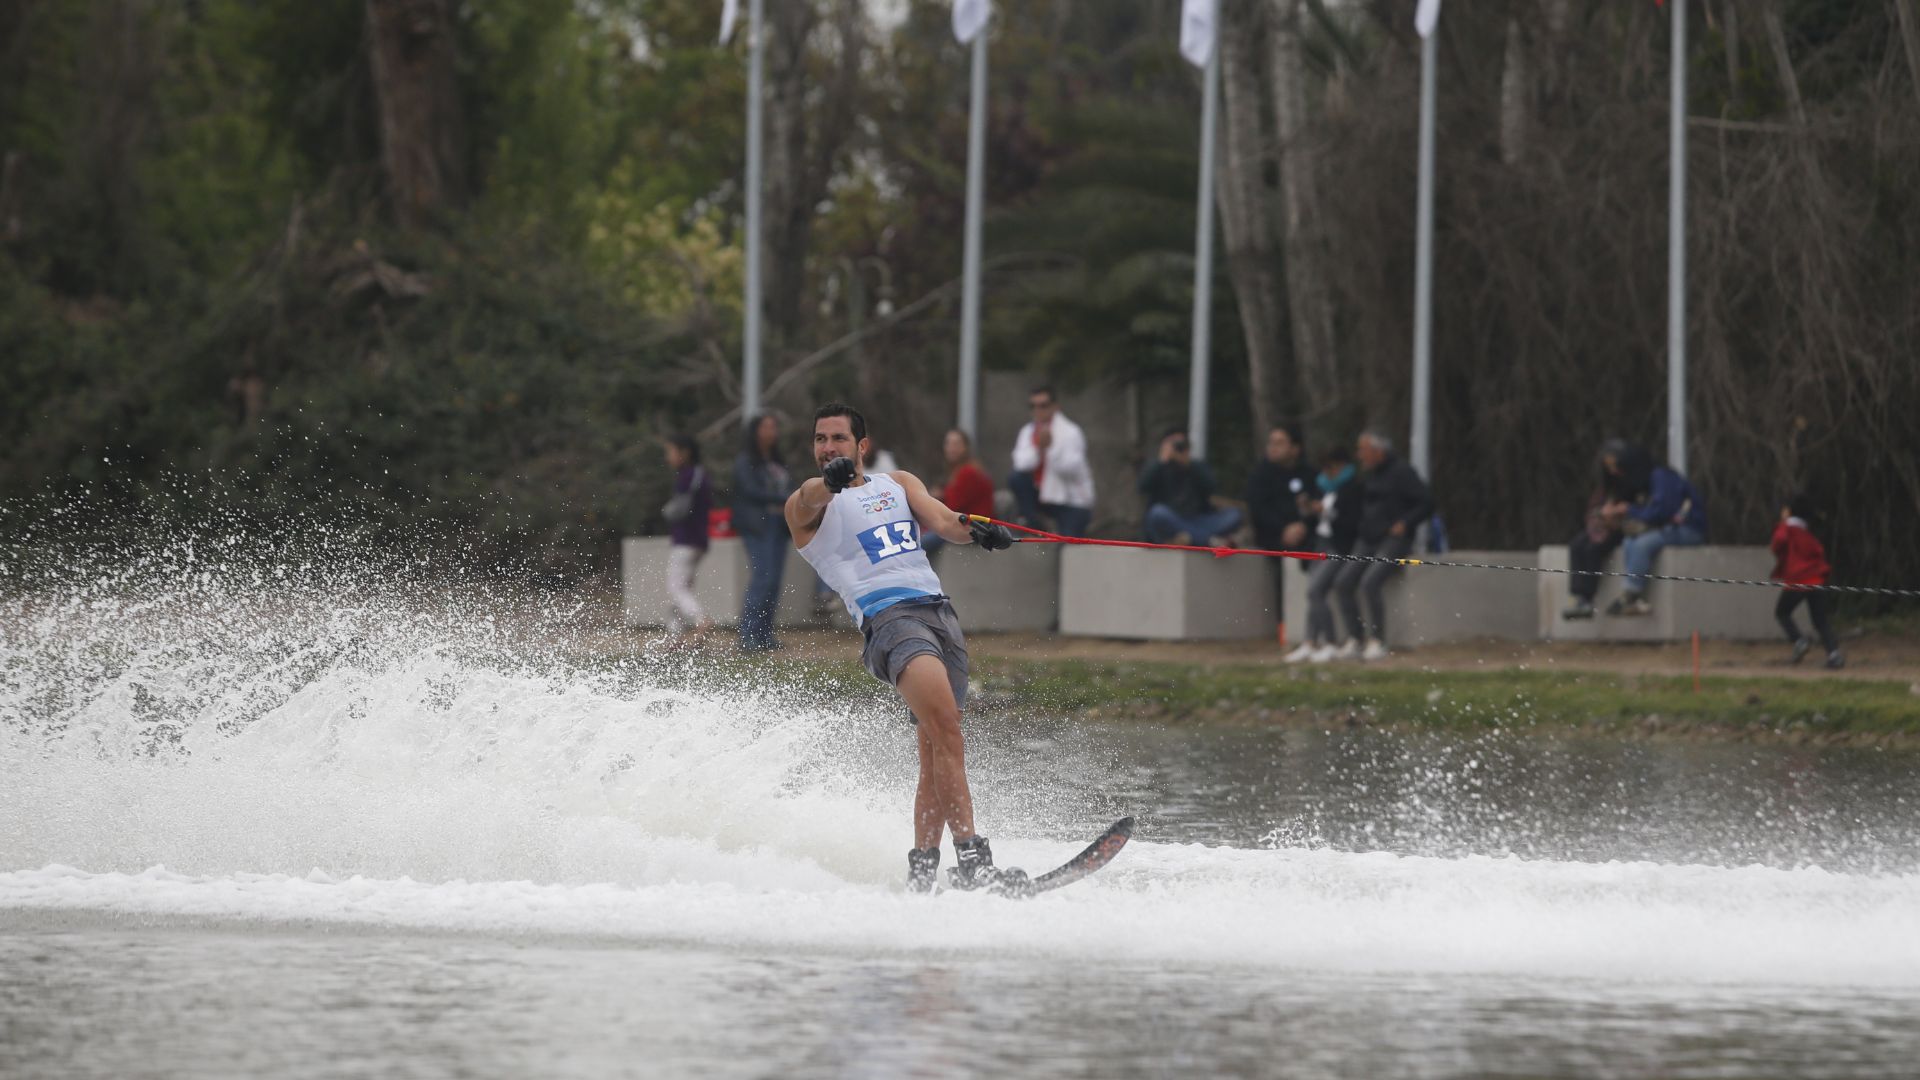 Water Skiing determines finalists in the Trick Discipline